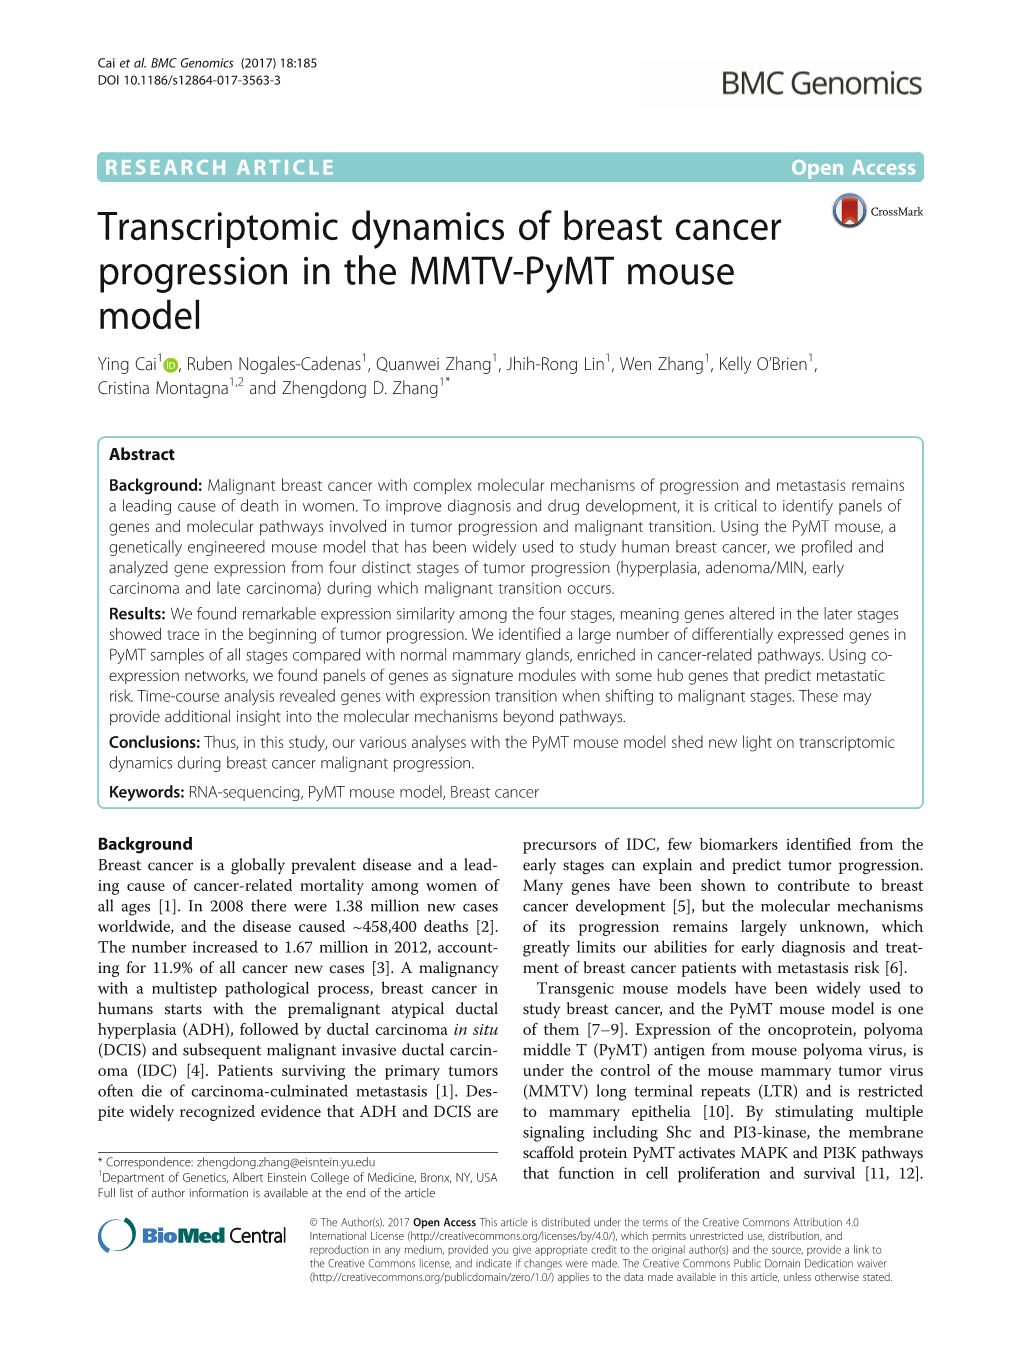 Transcriptomic Dynamics of Breast Cancer